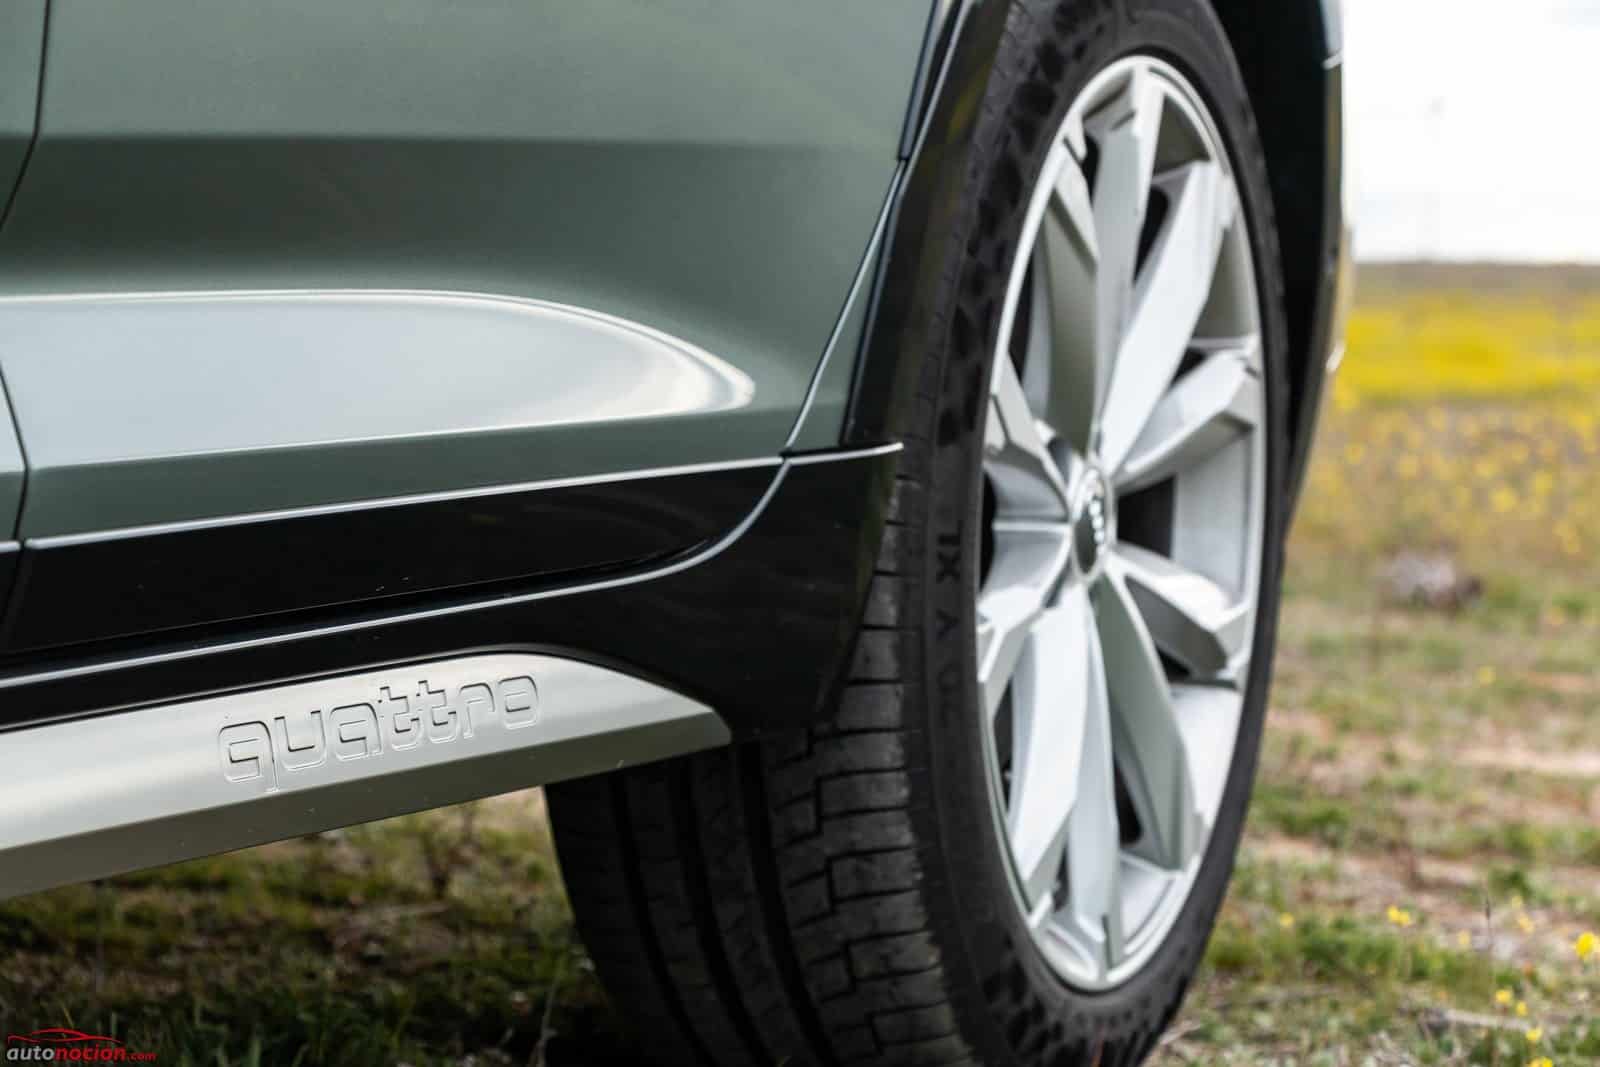 https://www.autonocion.com/wp-content/uploads/2020/04/Prueba-Audi-A6-allroad-quattro-45-TDI-tiptronic-2020-26.jpg